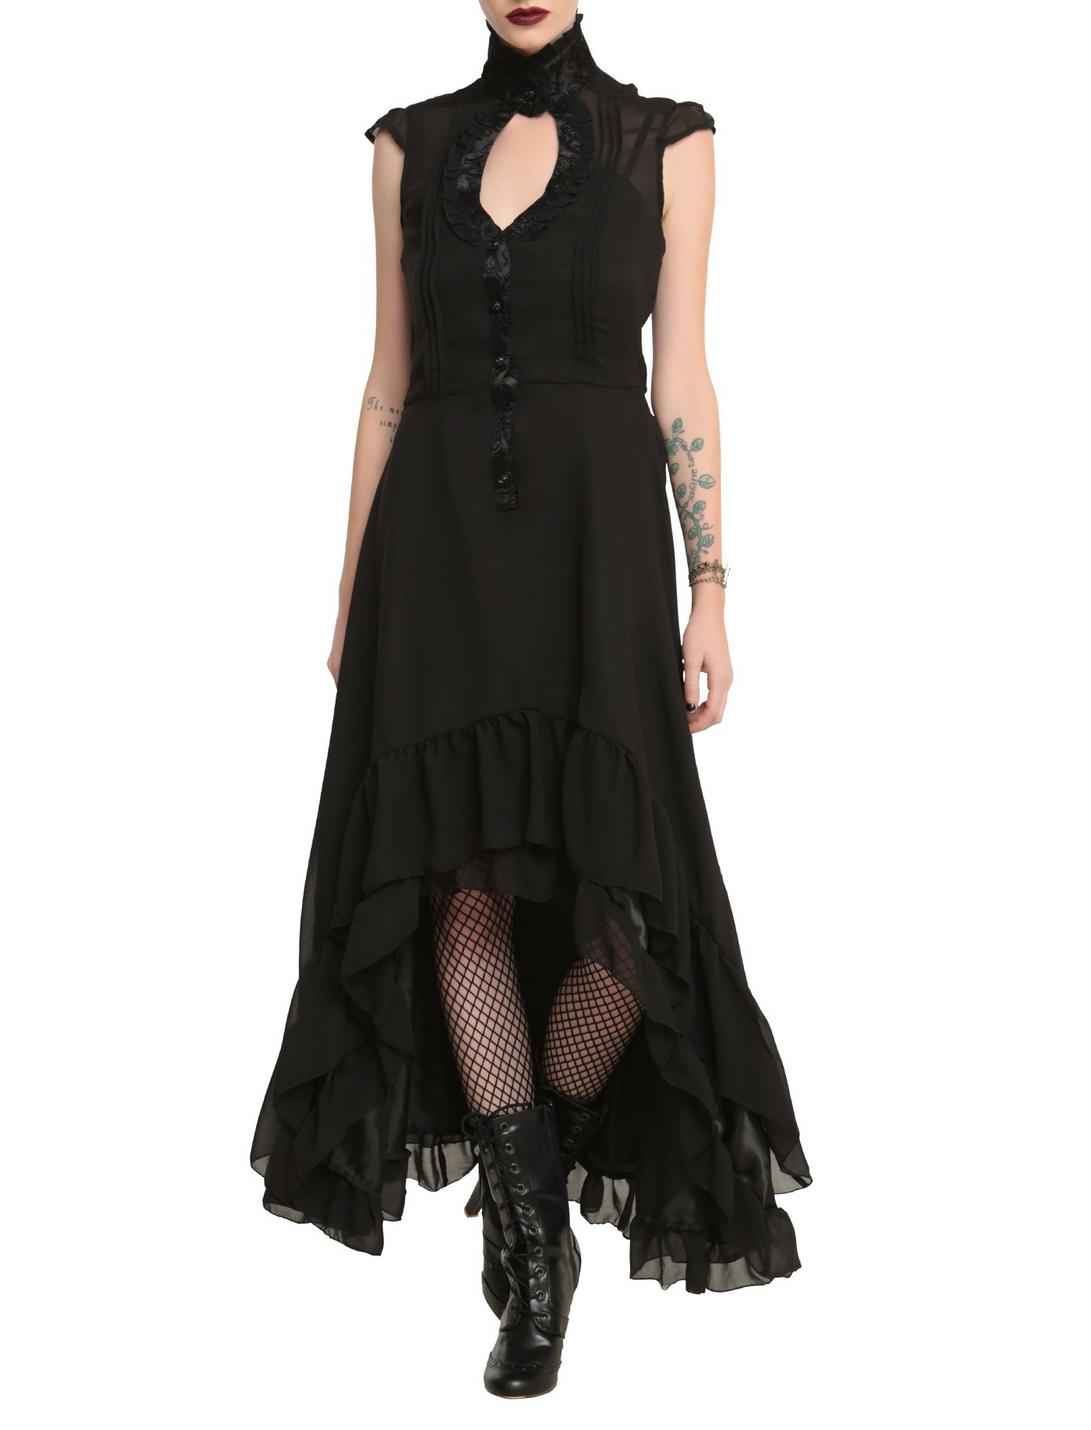 Jawbreaker Black Victorian Dress, BLACK, hi-res